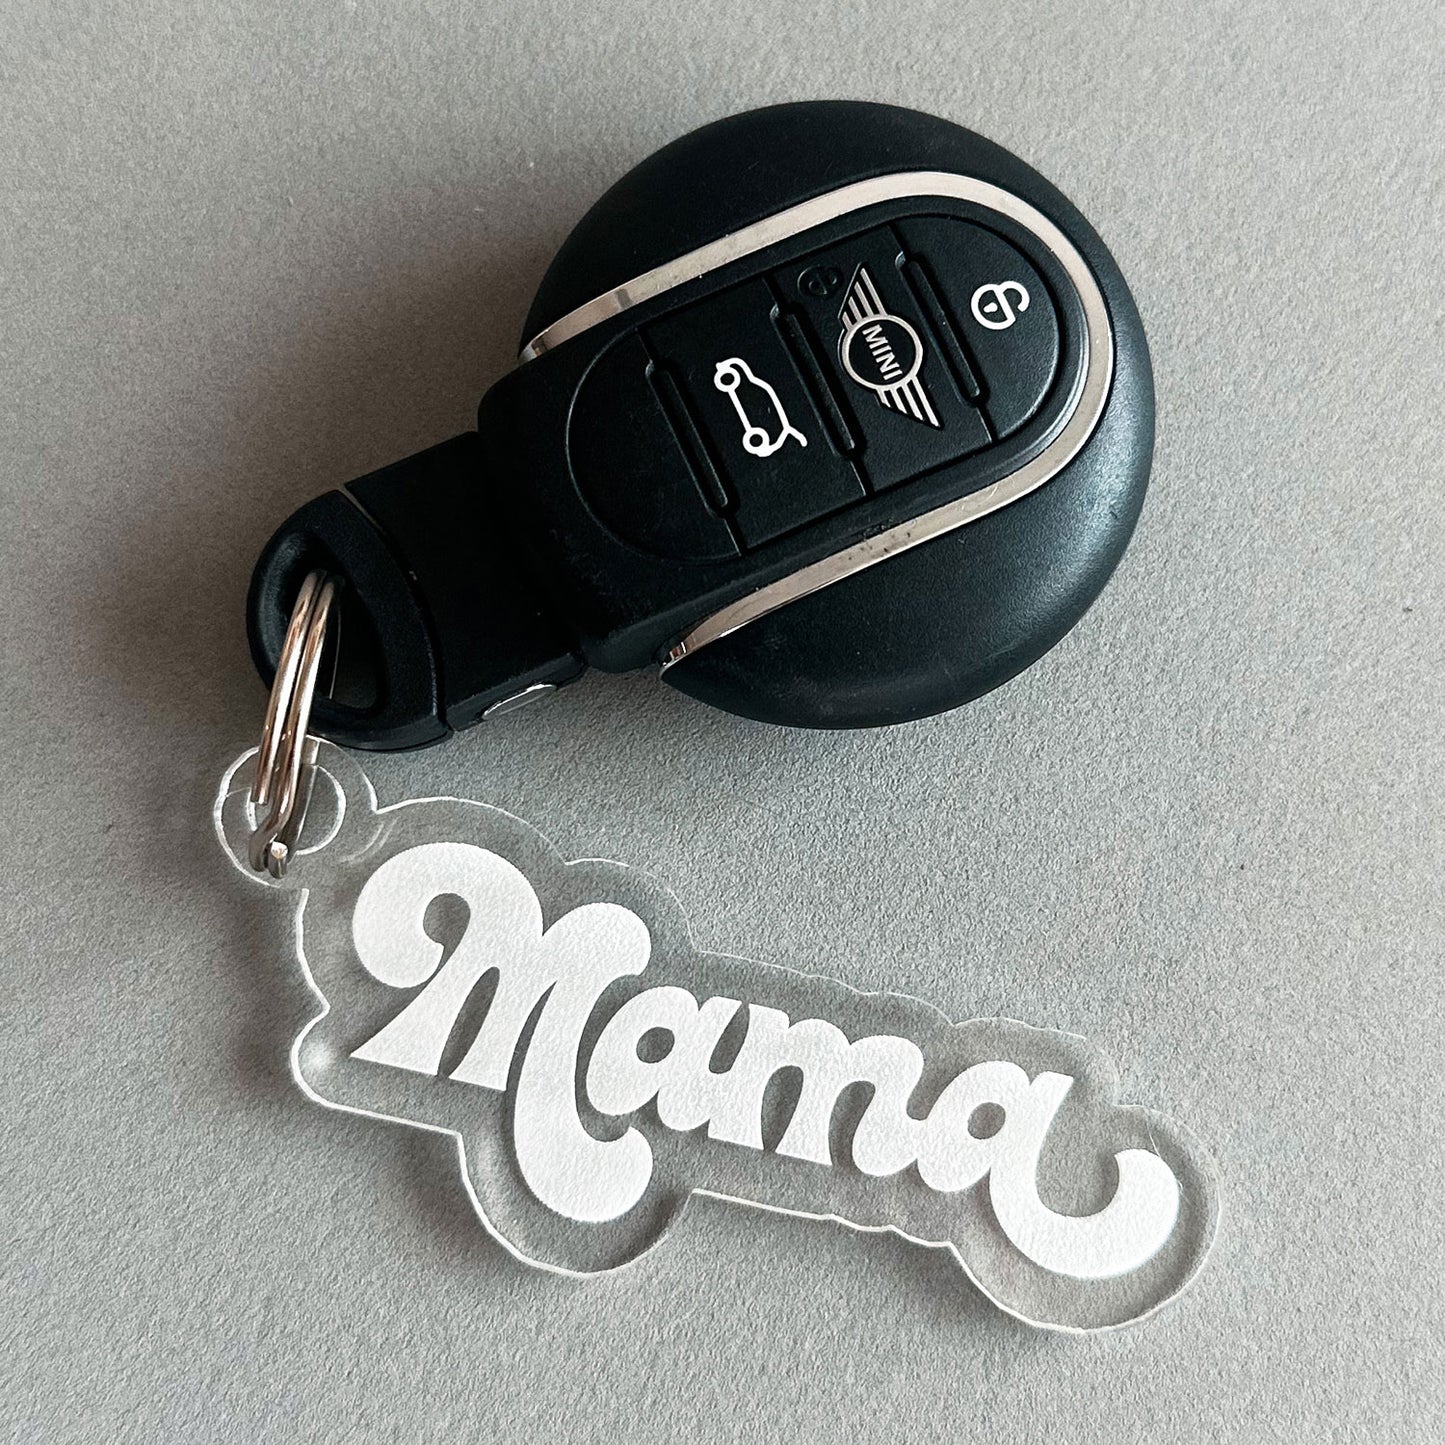 Retro Mama Mother's Day Keychain